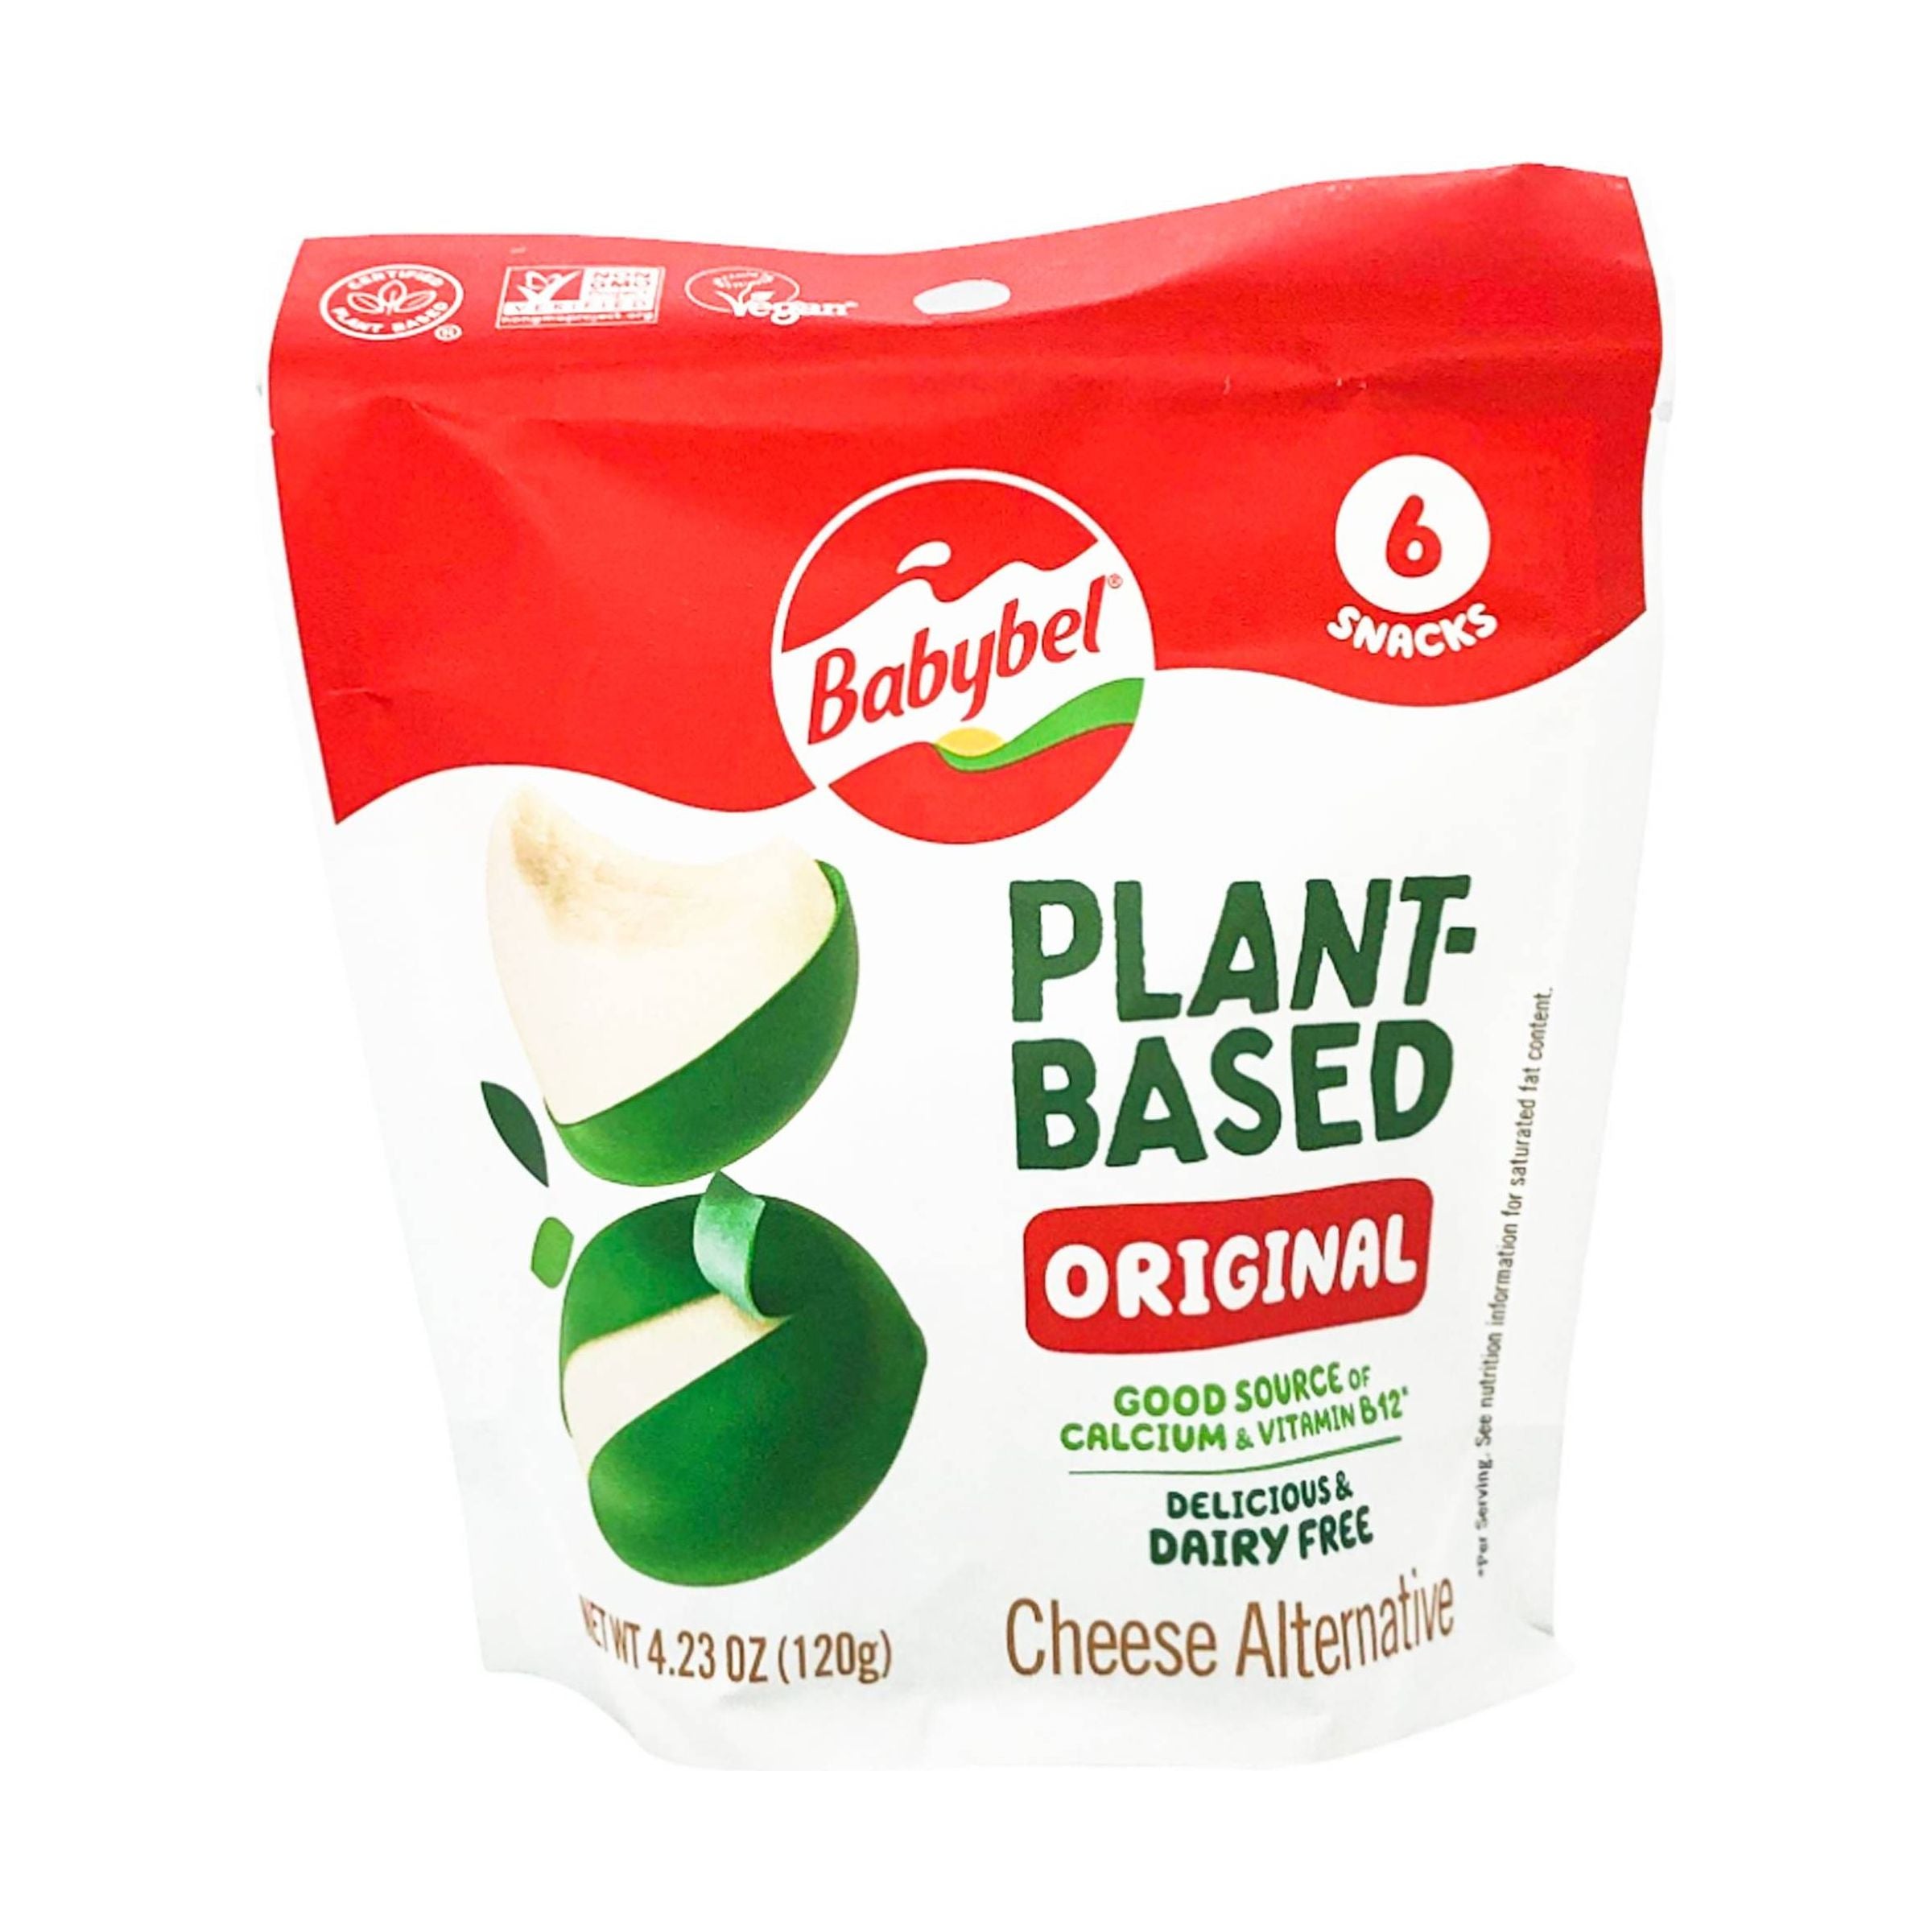 Babybel Plant-Based Original At Whole Foods Market 4.23oz 8ct